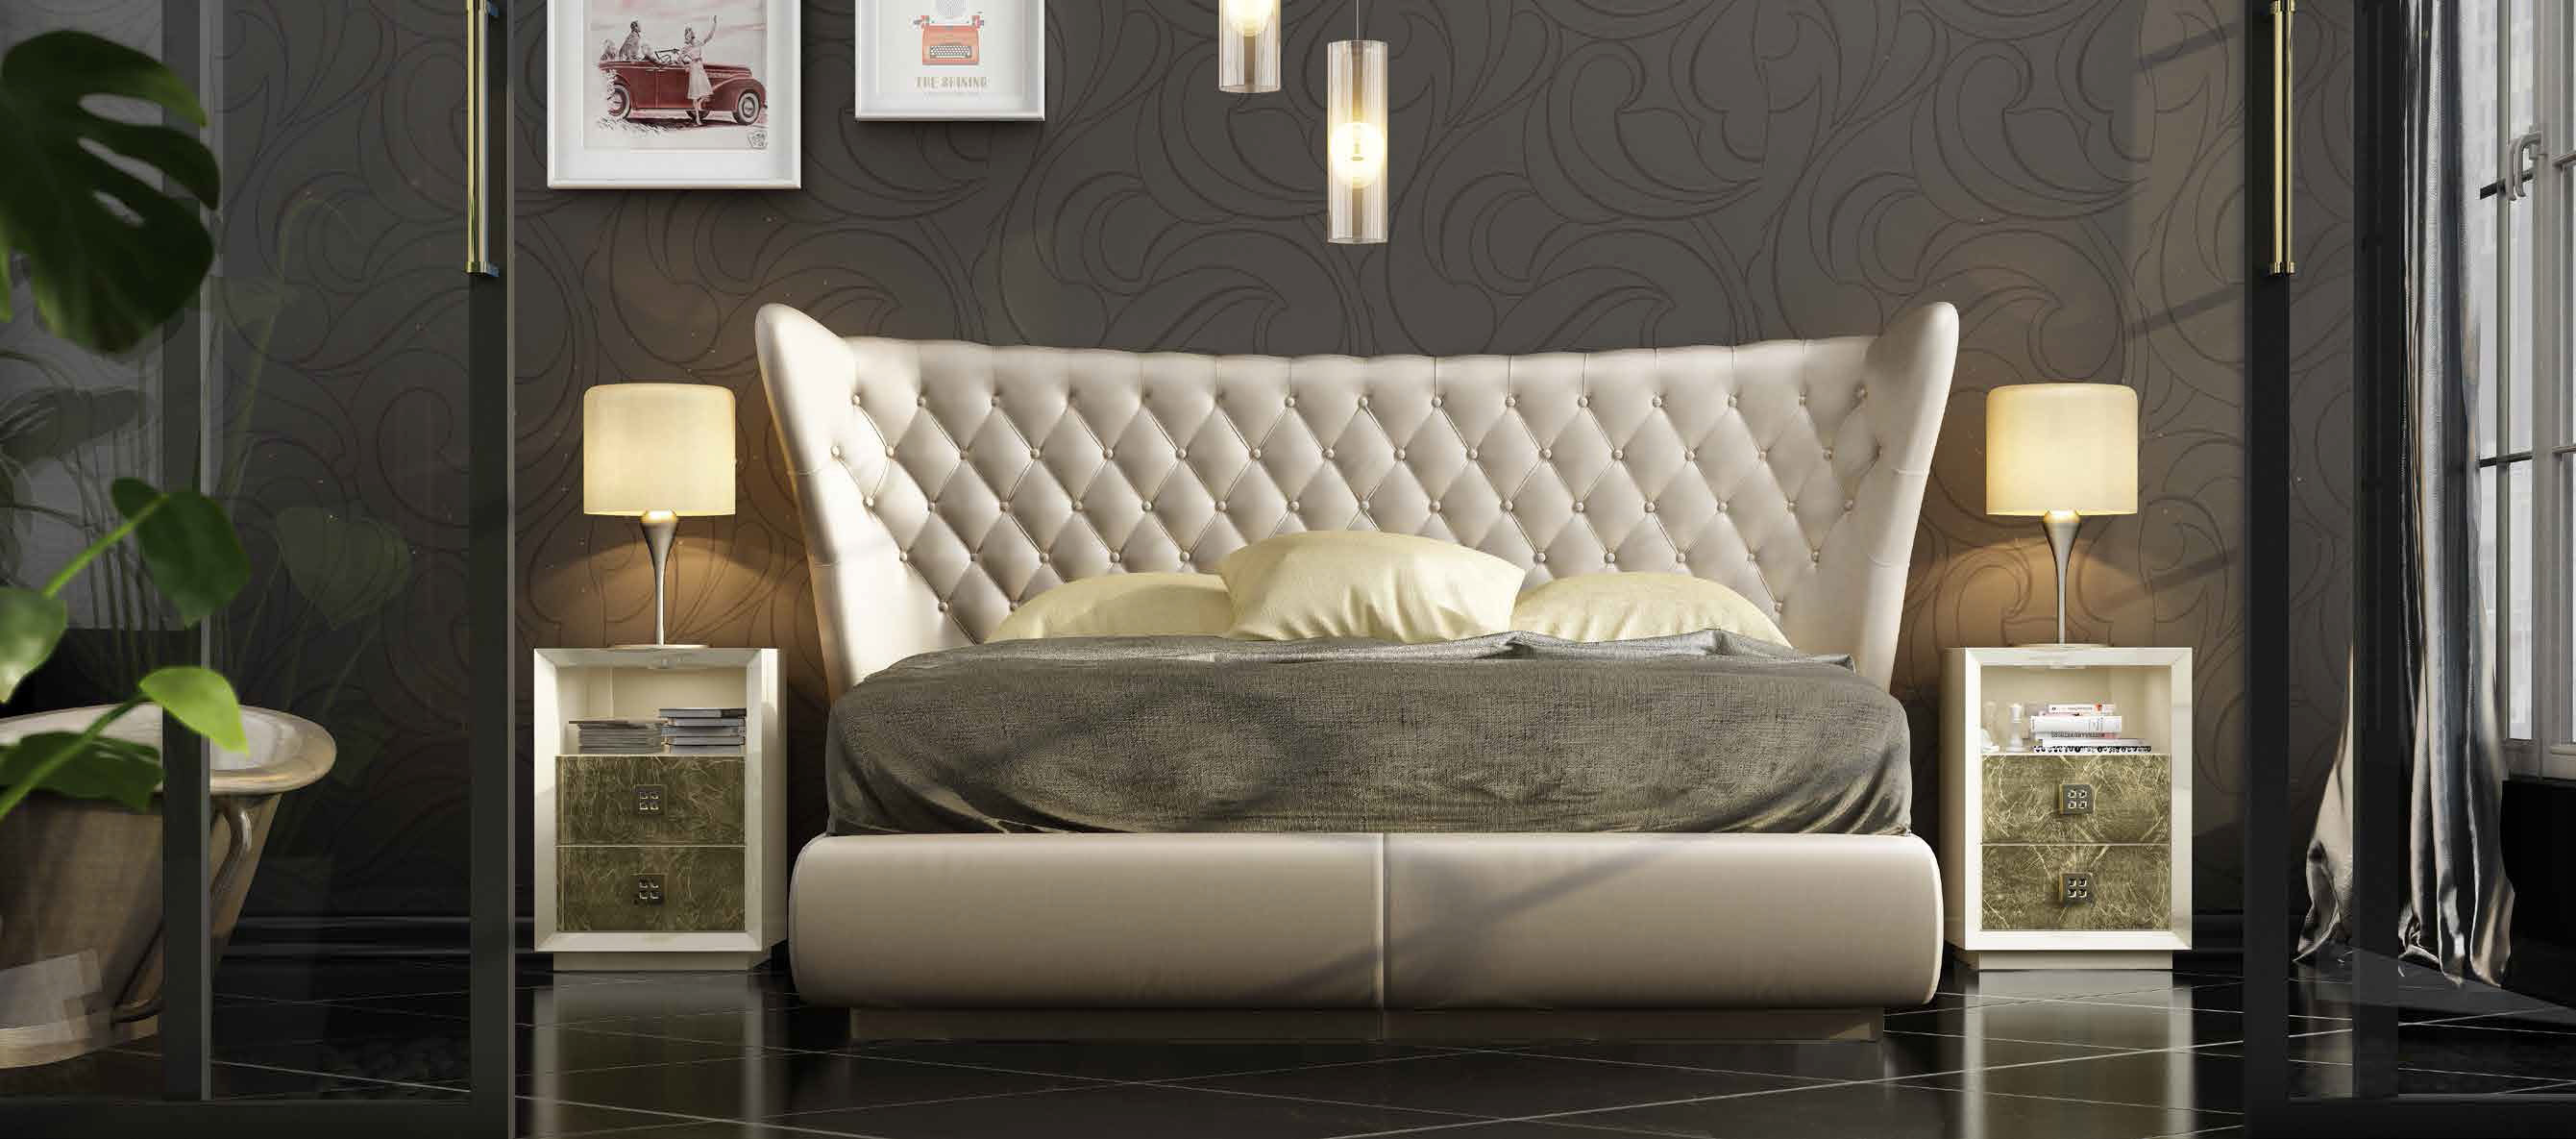 Bedroom Furniture Beds with storage DOR 48